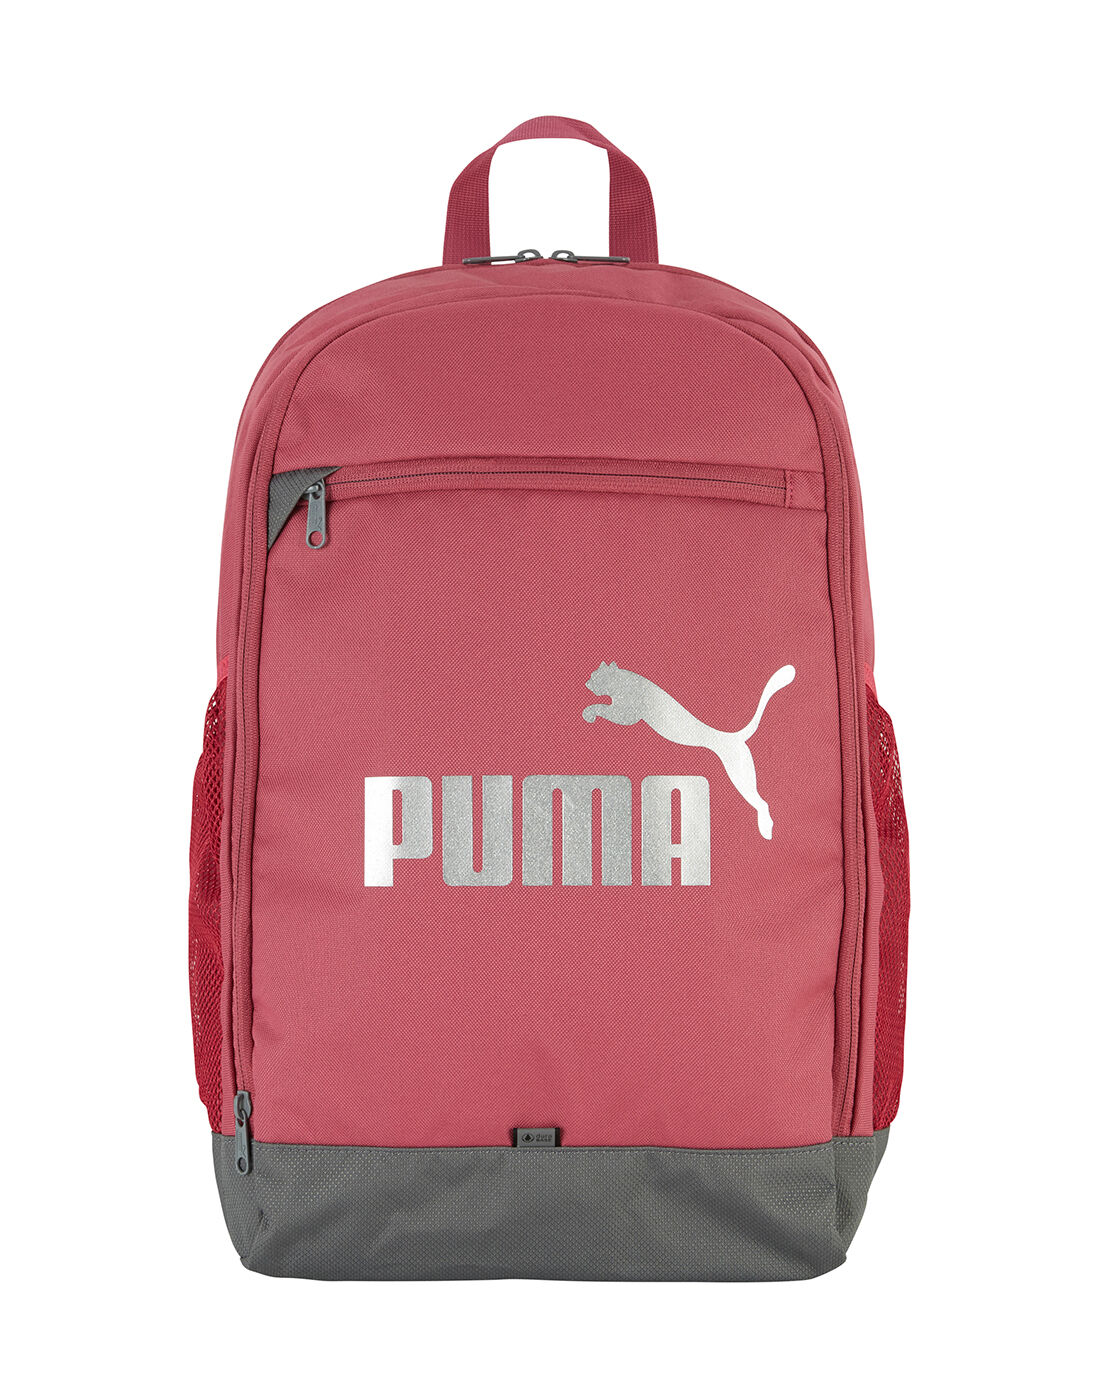 Puma Pumagram Belt Bag | Belt bag, Bags, Puma